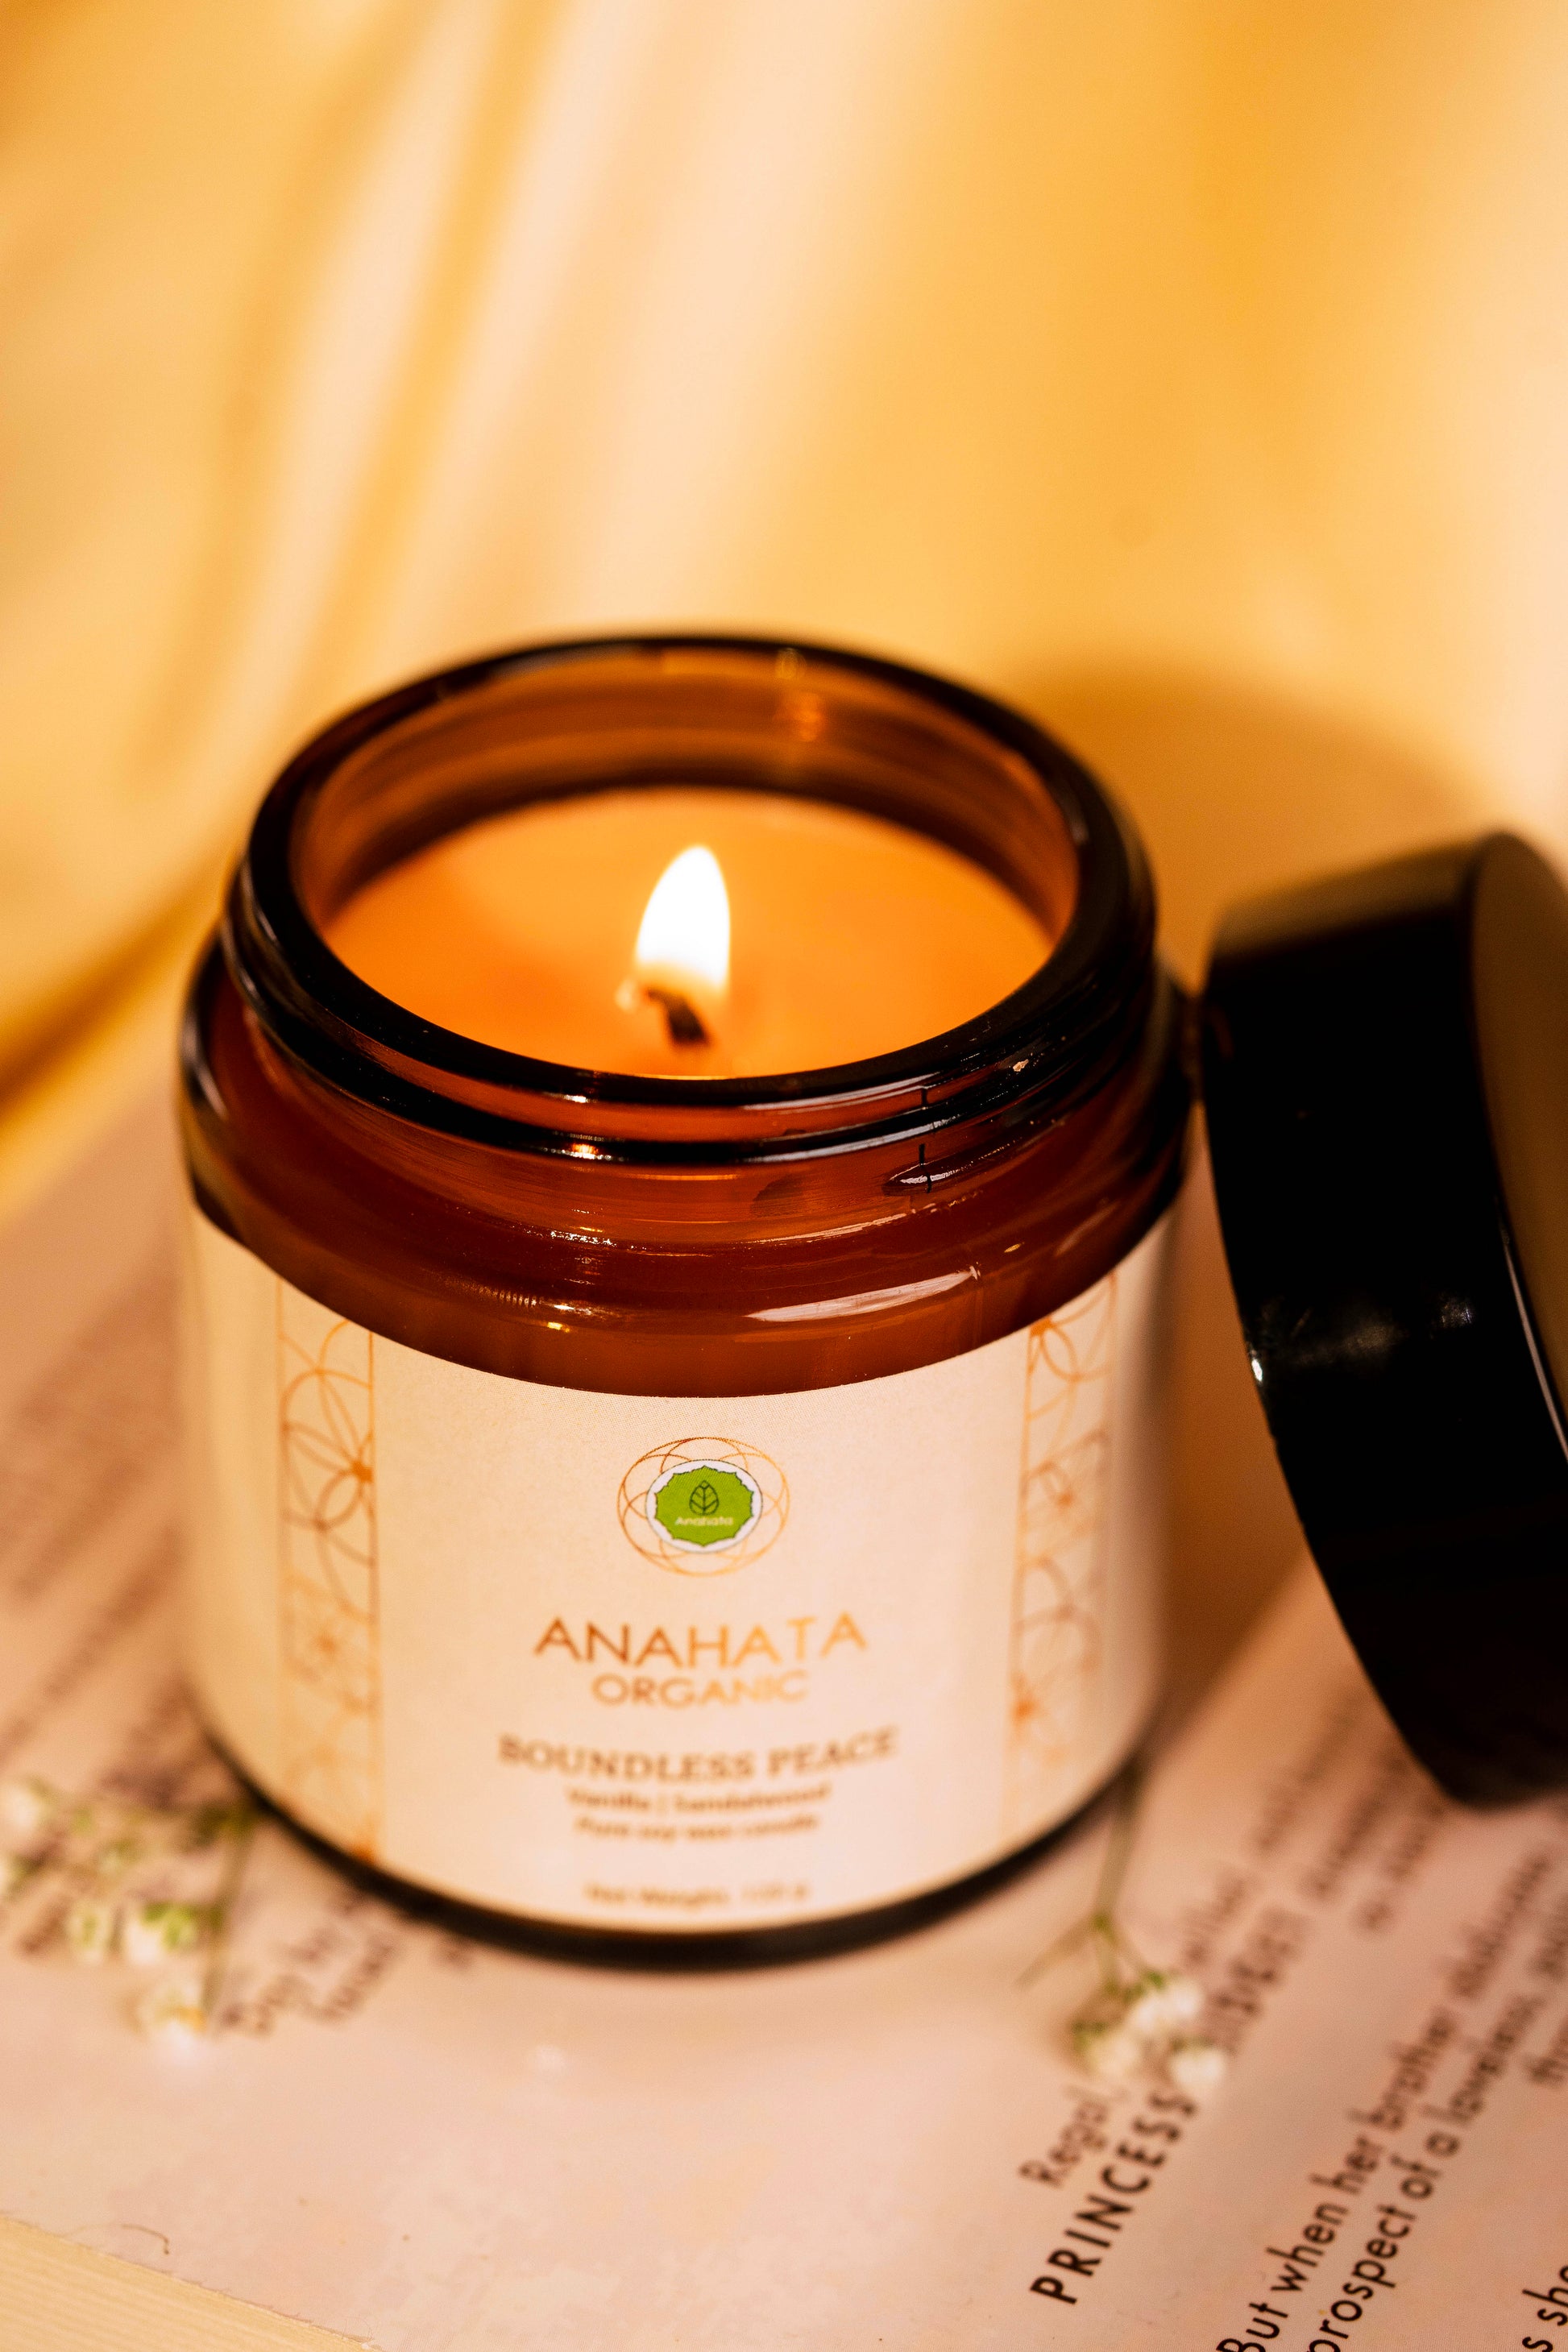 Boundless Peace | Pure Soy Wax Candle | Vanilla & Sandalwood - Anahata Organic